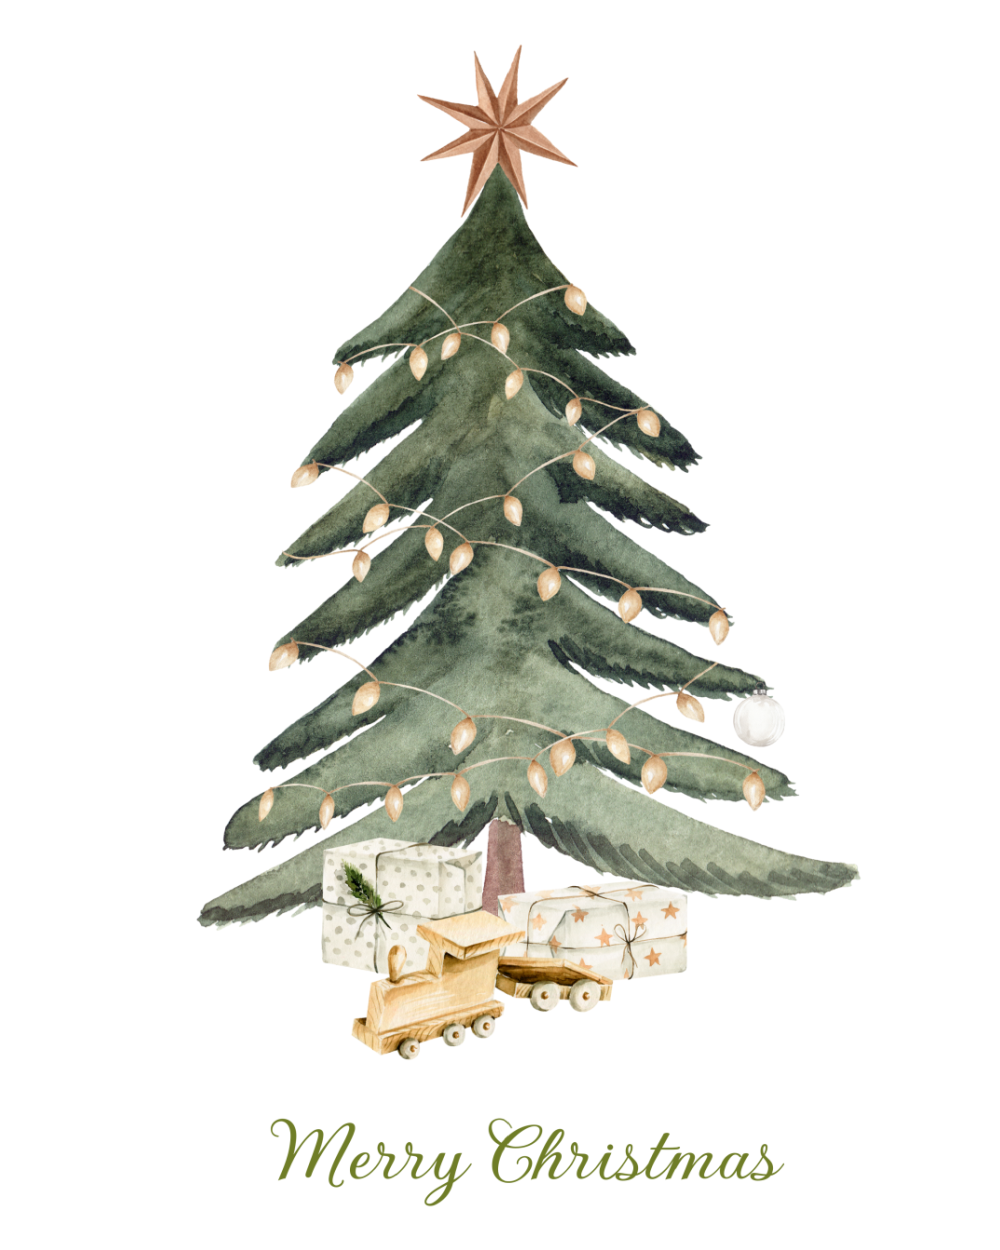 Christmas artwork with Christmas tree and Merry Christmas written on bottom.